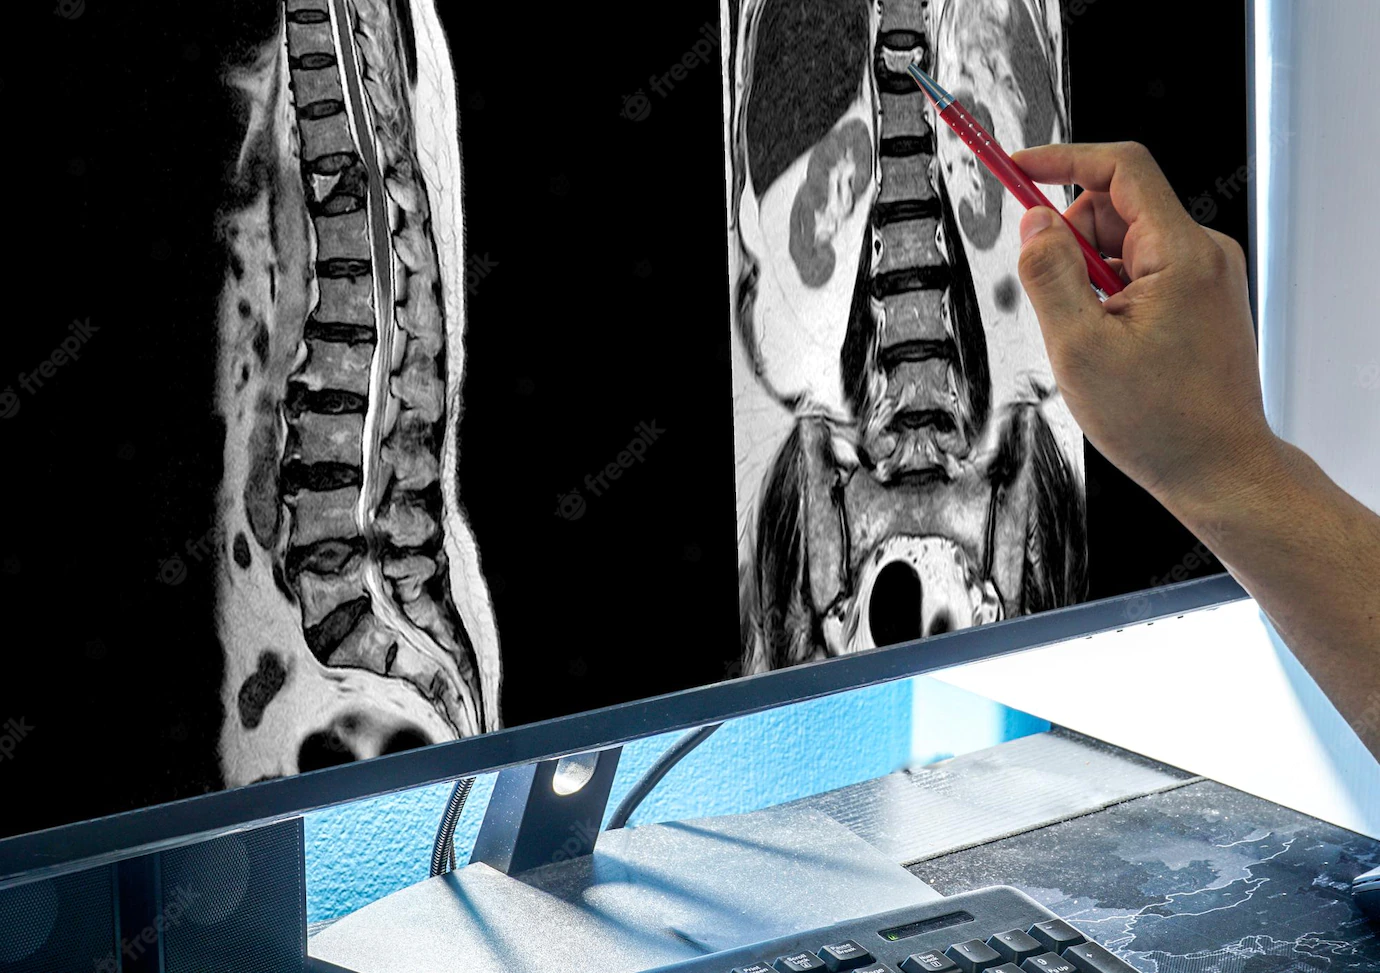 mri lumbar spine compression fracture bulging l1 2 doctor point lumbar spondylosis from l1 2 l5 s1 discs medical healthcare concept 34251 661